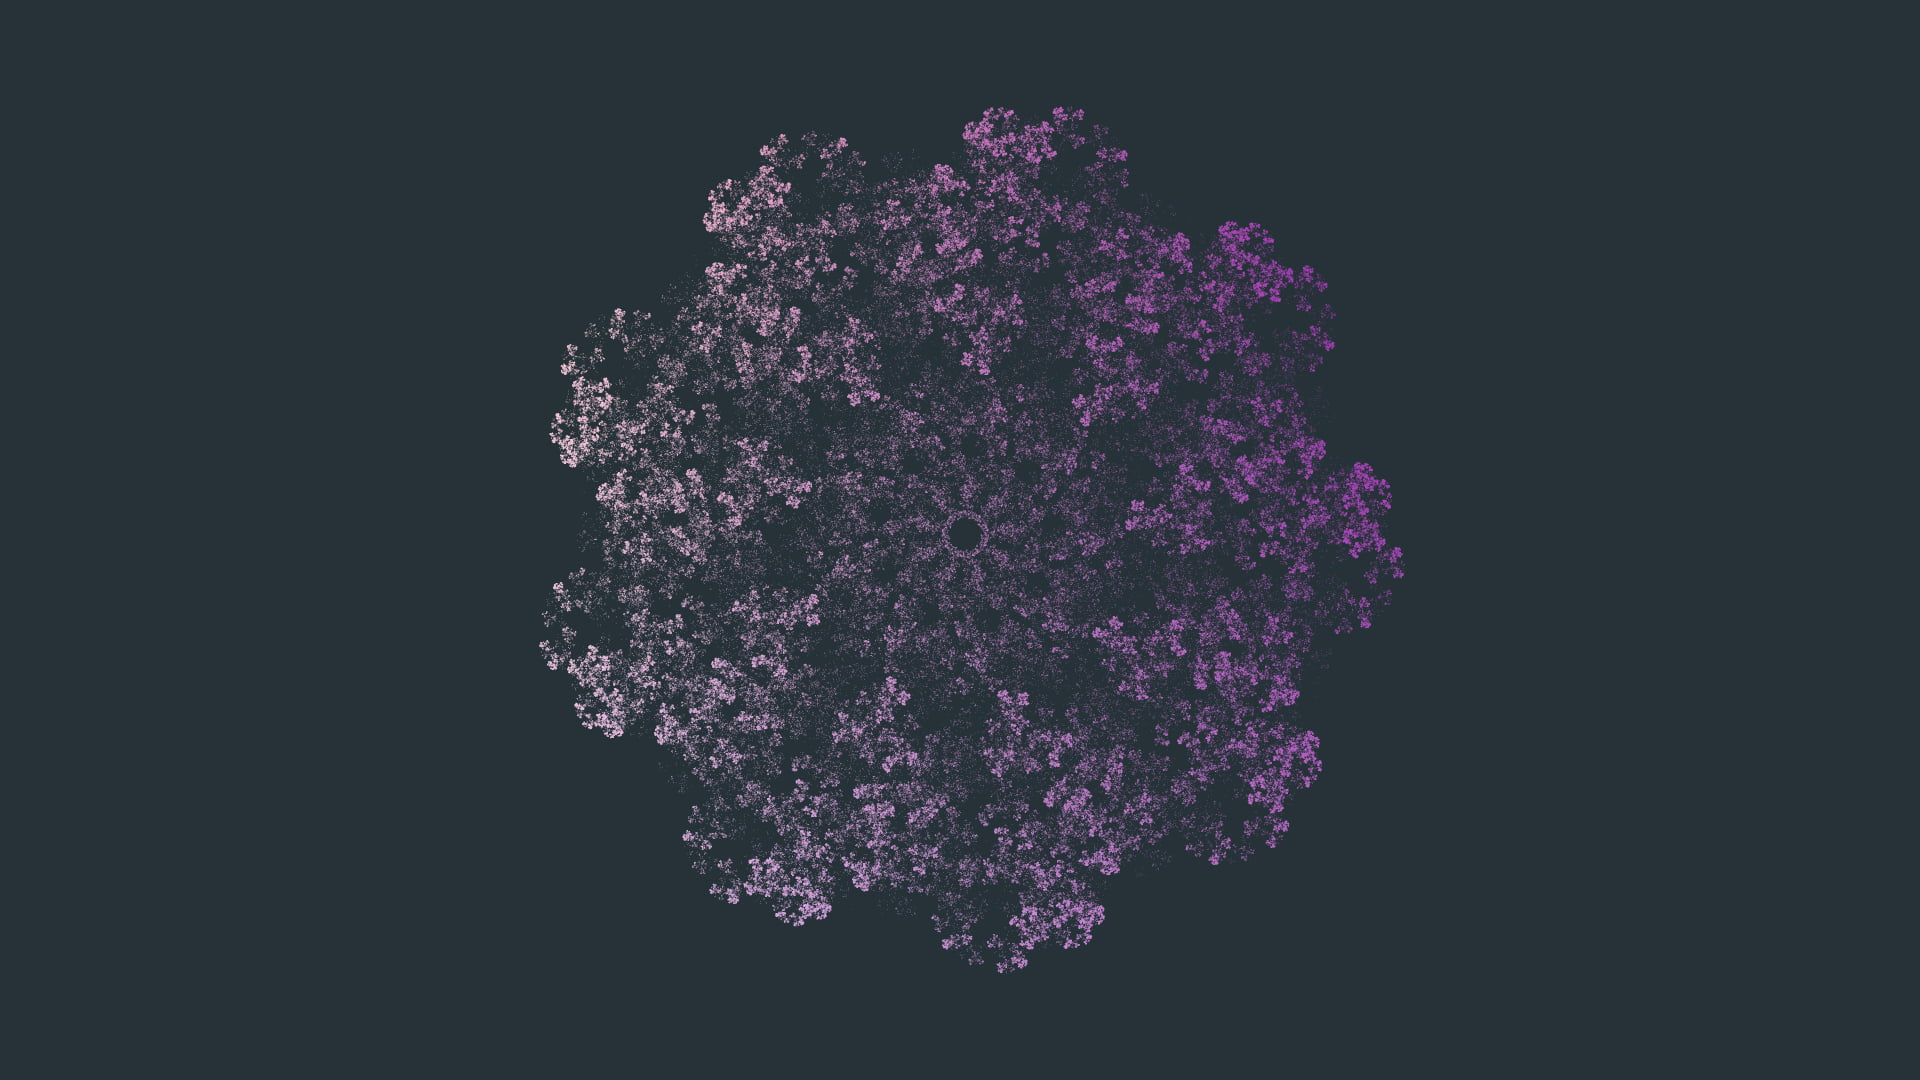 purple flower illustration, mathematics, geometry, simple,  grey